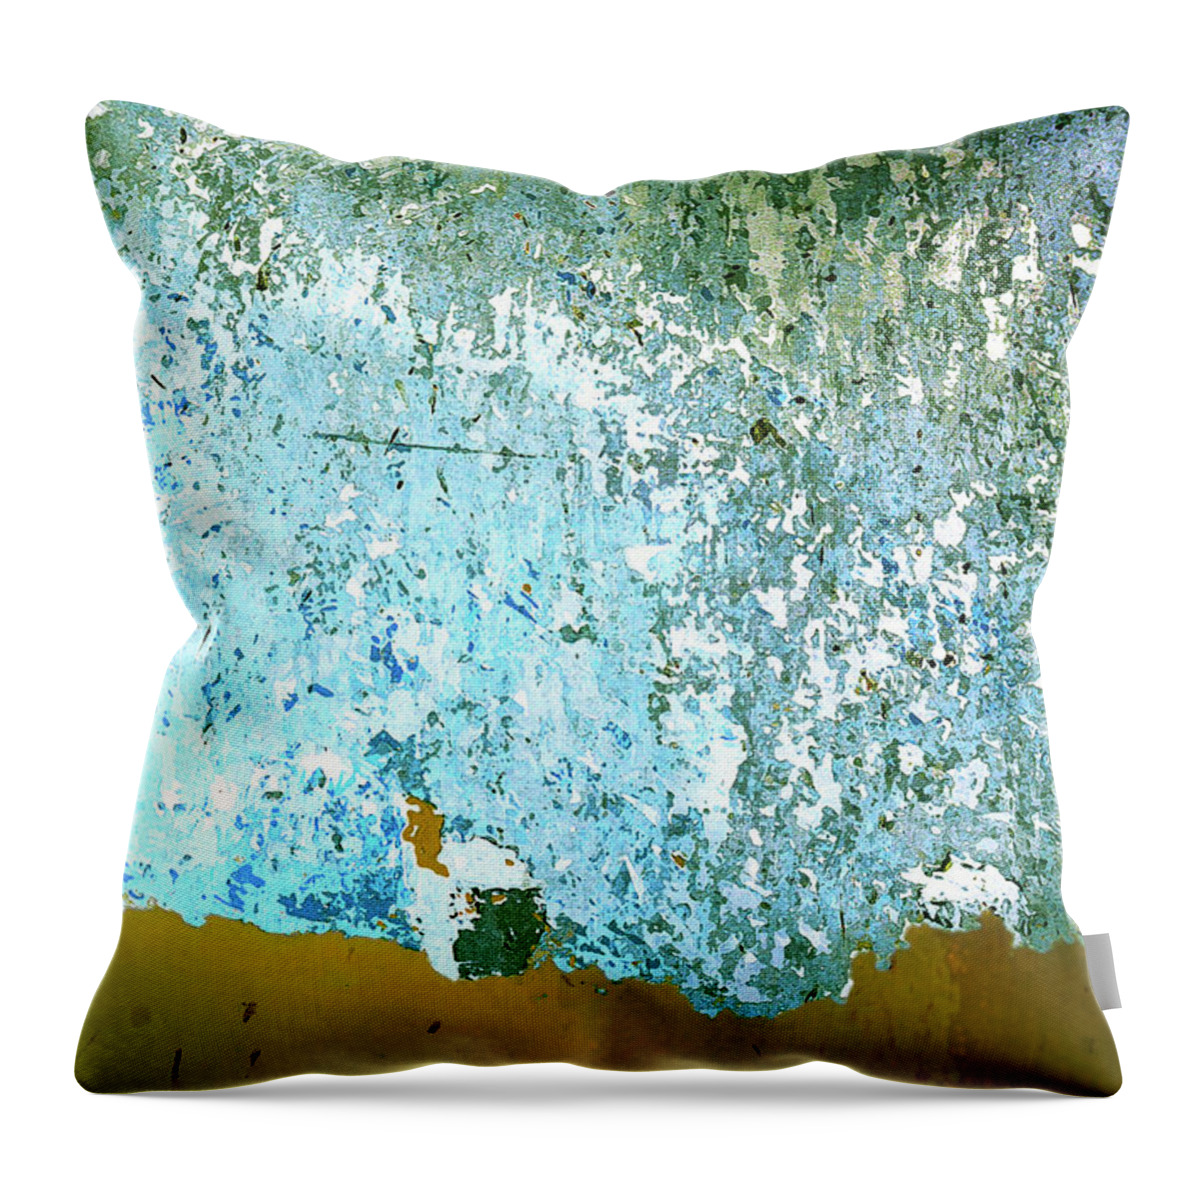 Abstract Throw Pillow featuring the digital art Teal Forgotten by Susan Vineyard